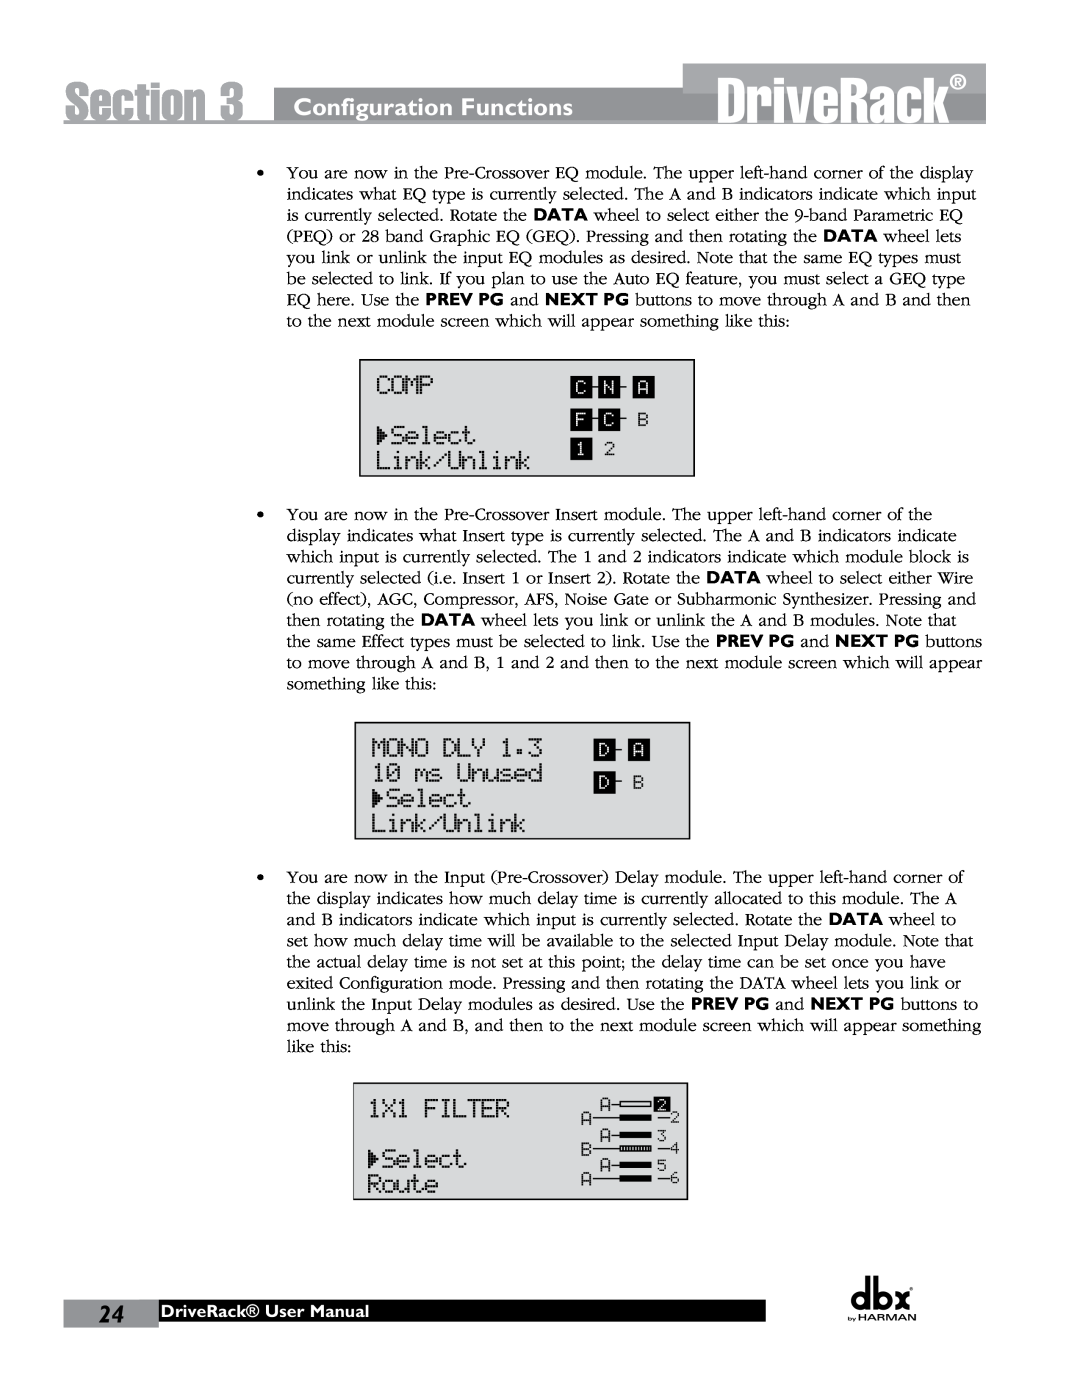 JBL 260 user manual Section, Configuration Functions, A A2, DriveRack User Manual, Cna Fcb, Da Db 